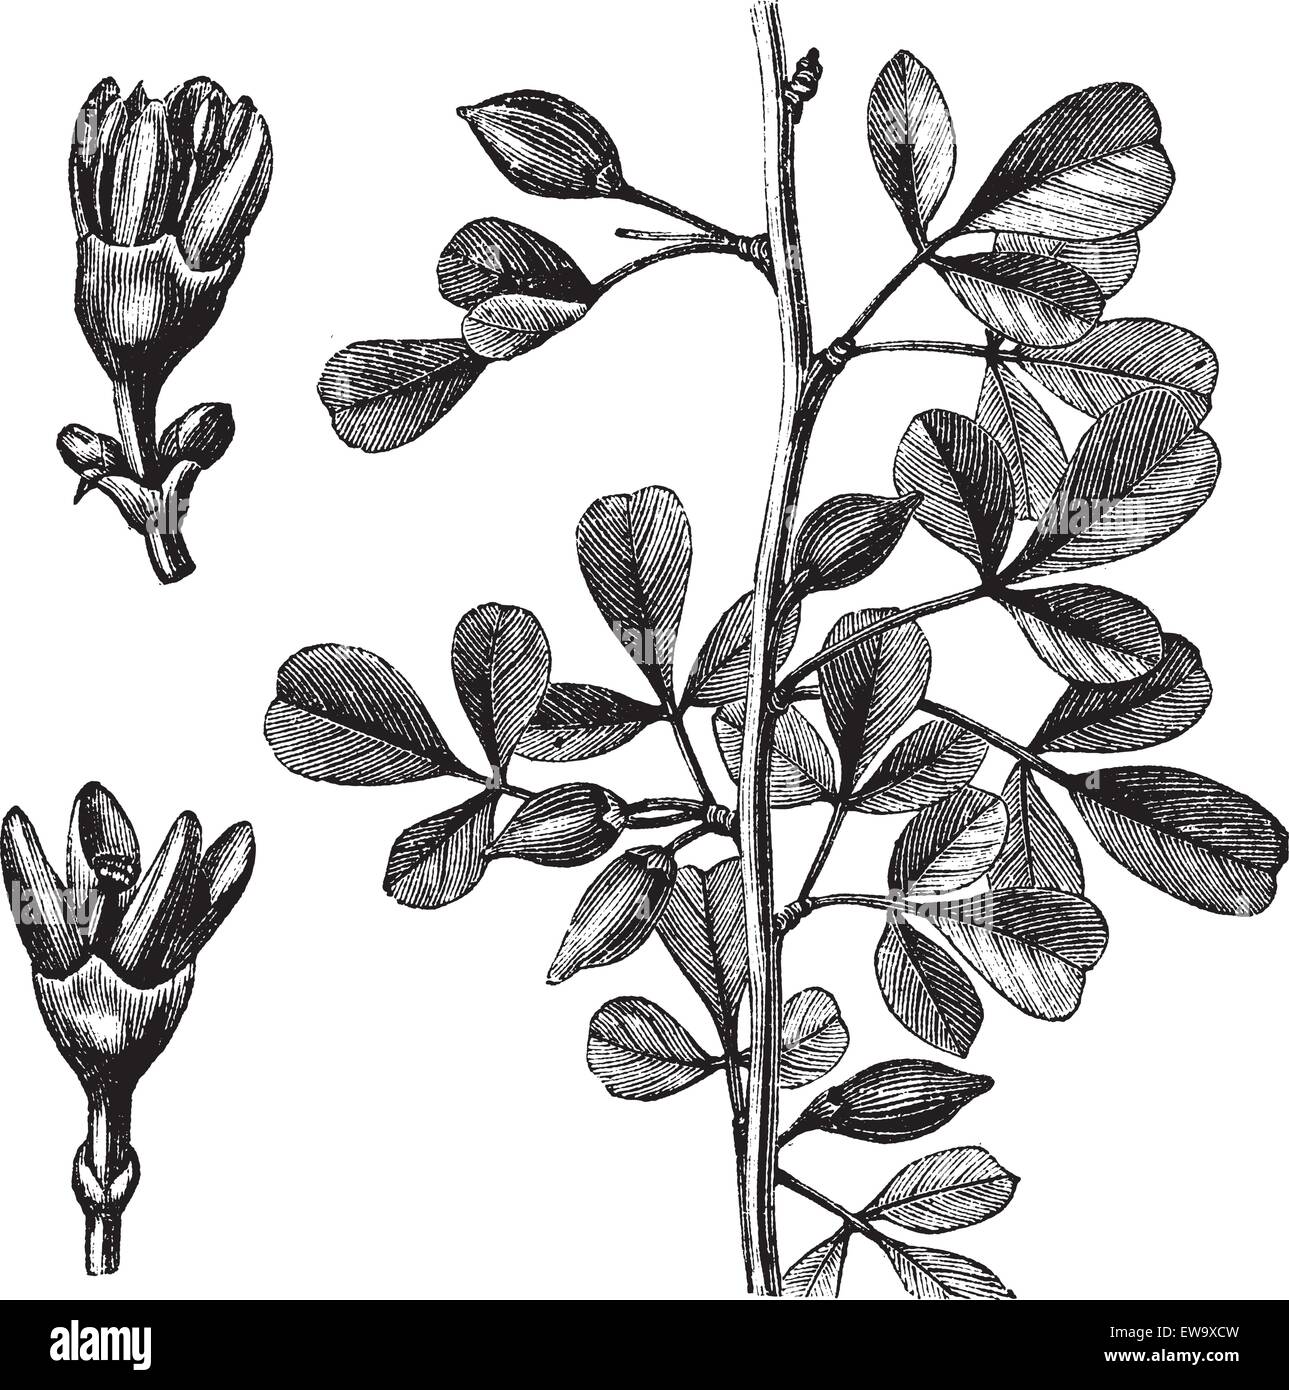 Myrrh or Balsamea or Balsamodendron ehrenbergianum, vintage engraving. Old engraved illustration of a Myrrh plant showing flowers (left). Stock Vector